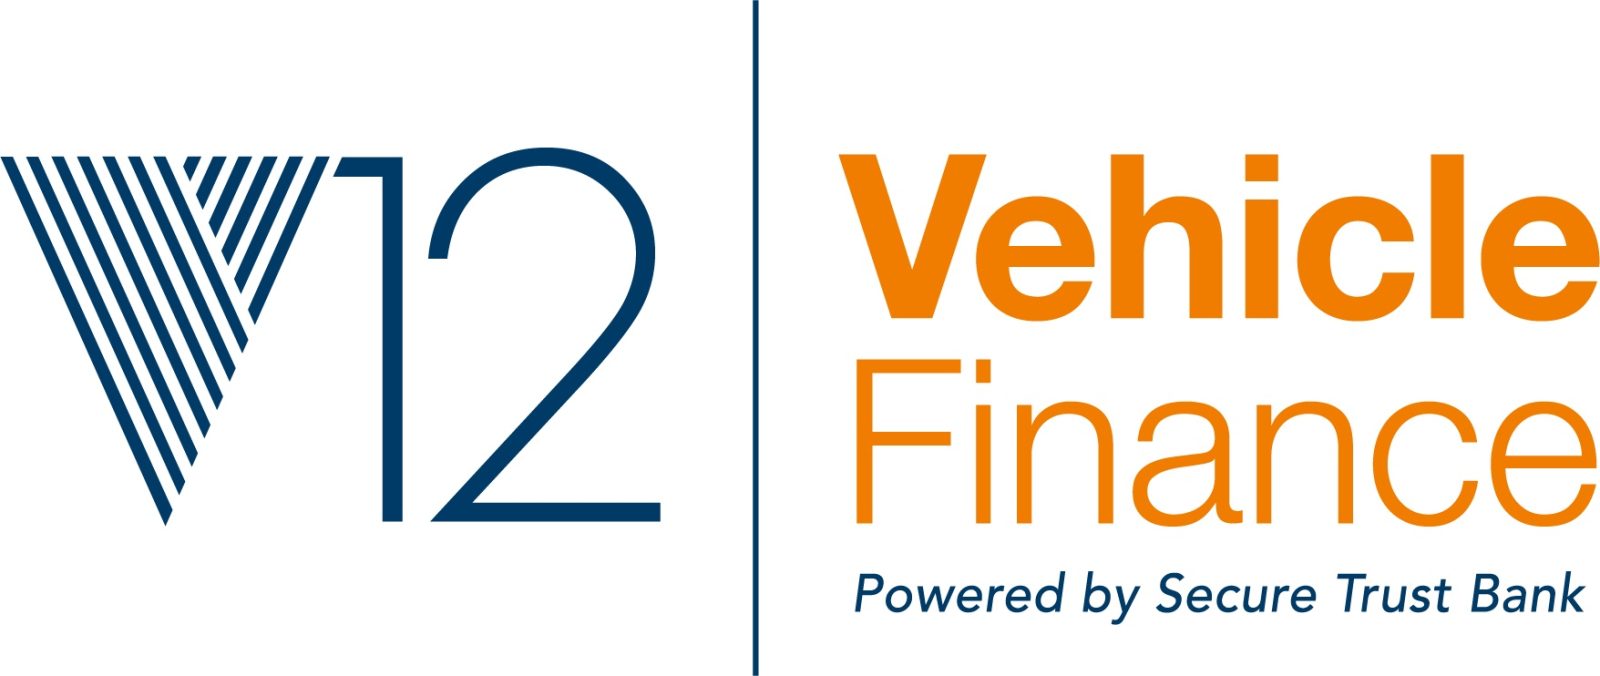 v12 vehicle finance